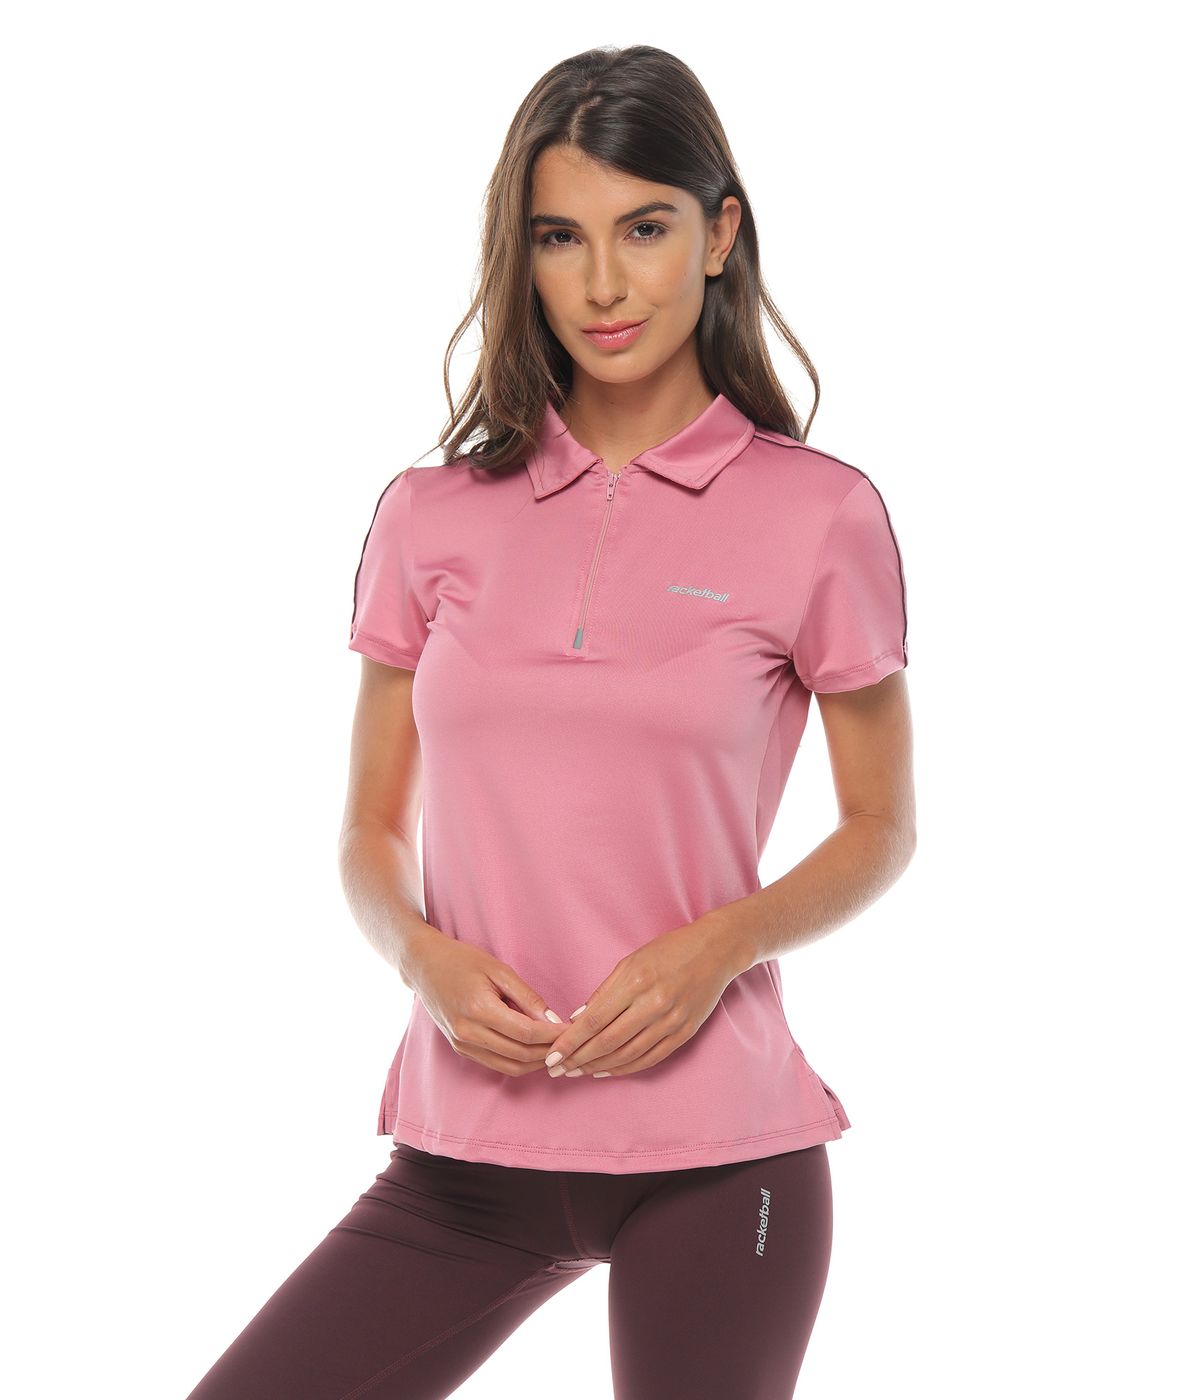 Camiseta polo de mujer, color rosa/berenjena - racketball movil